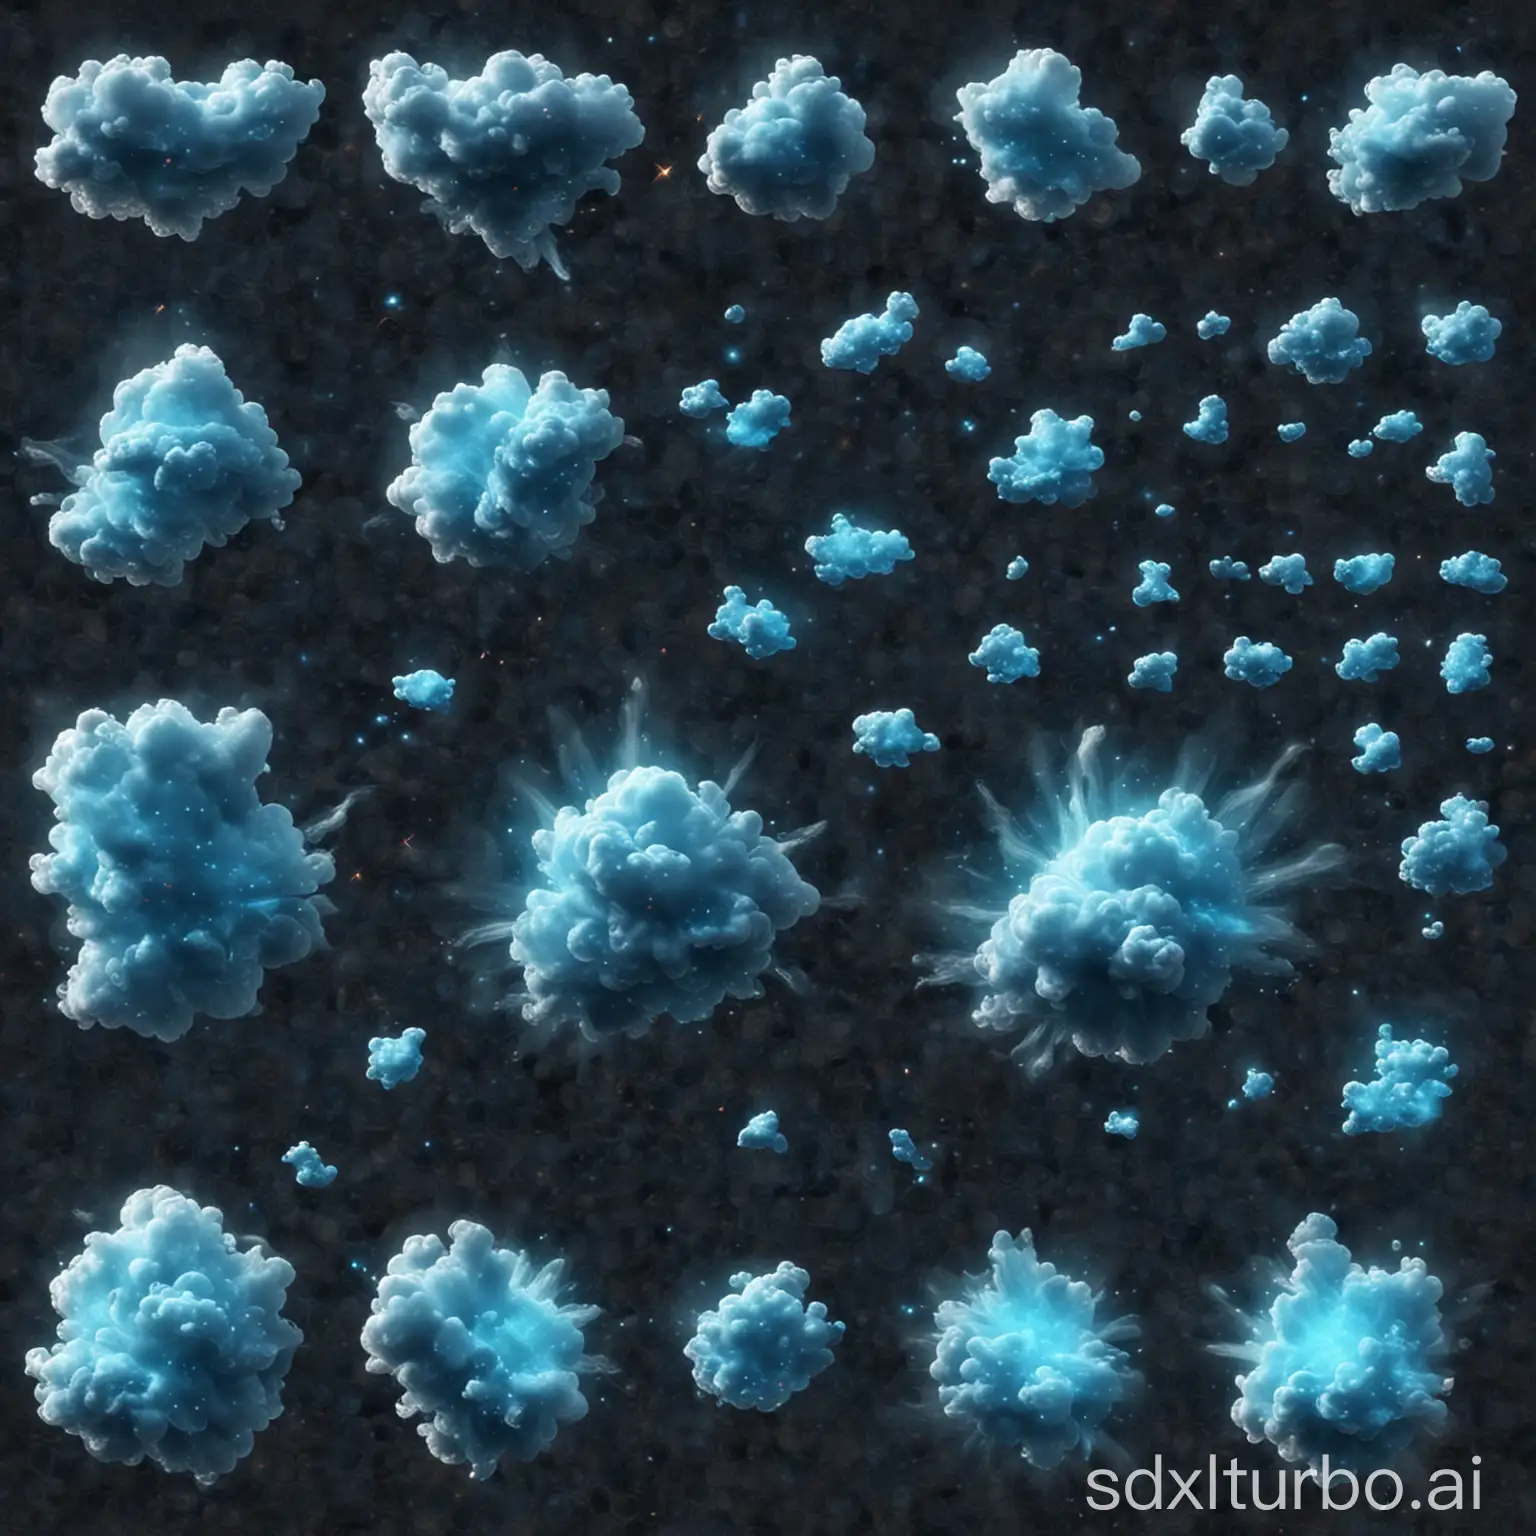 a 3D blue transparent space cloud, tileset for a game